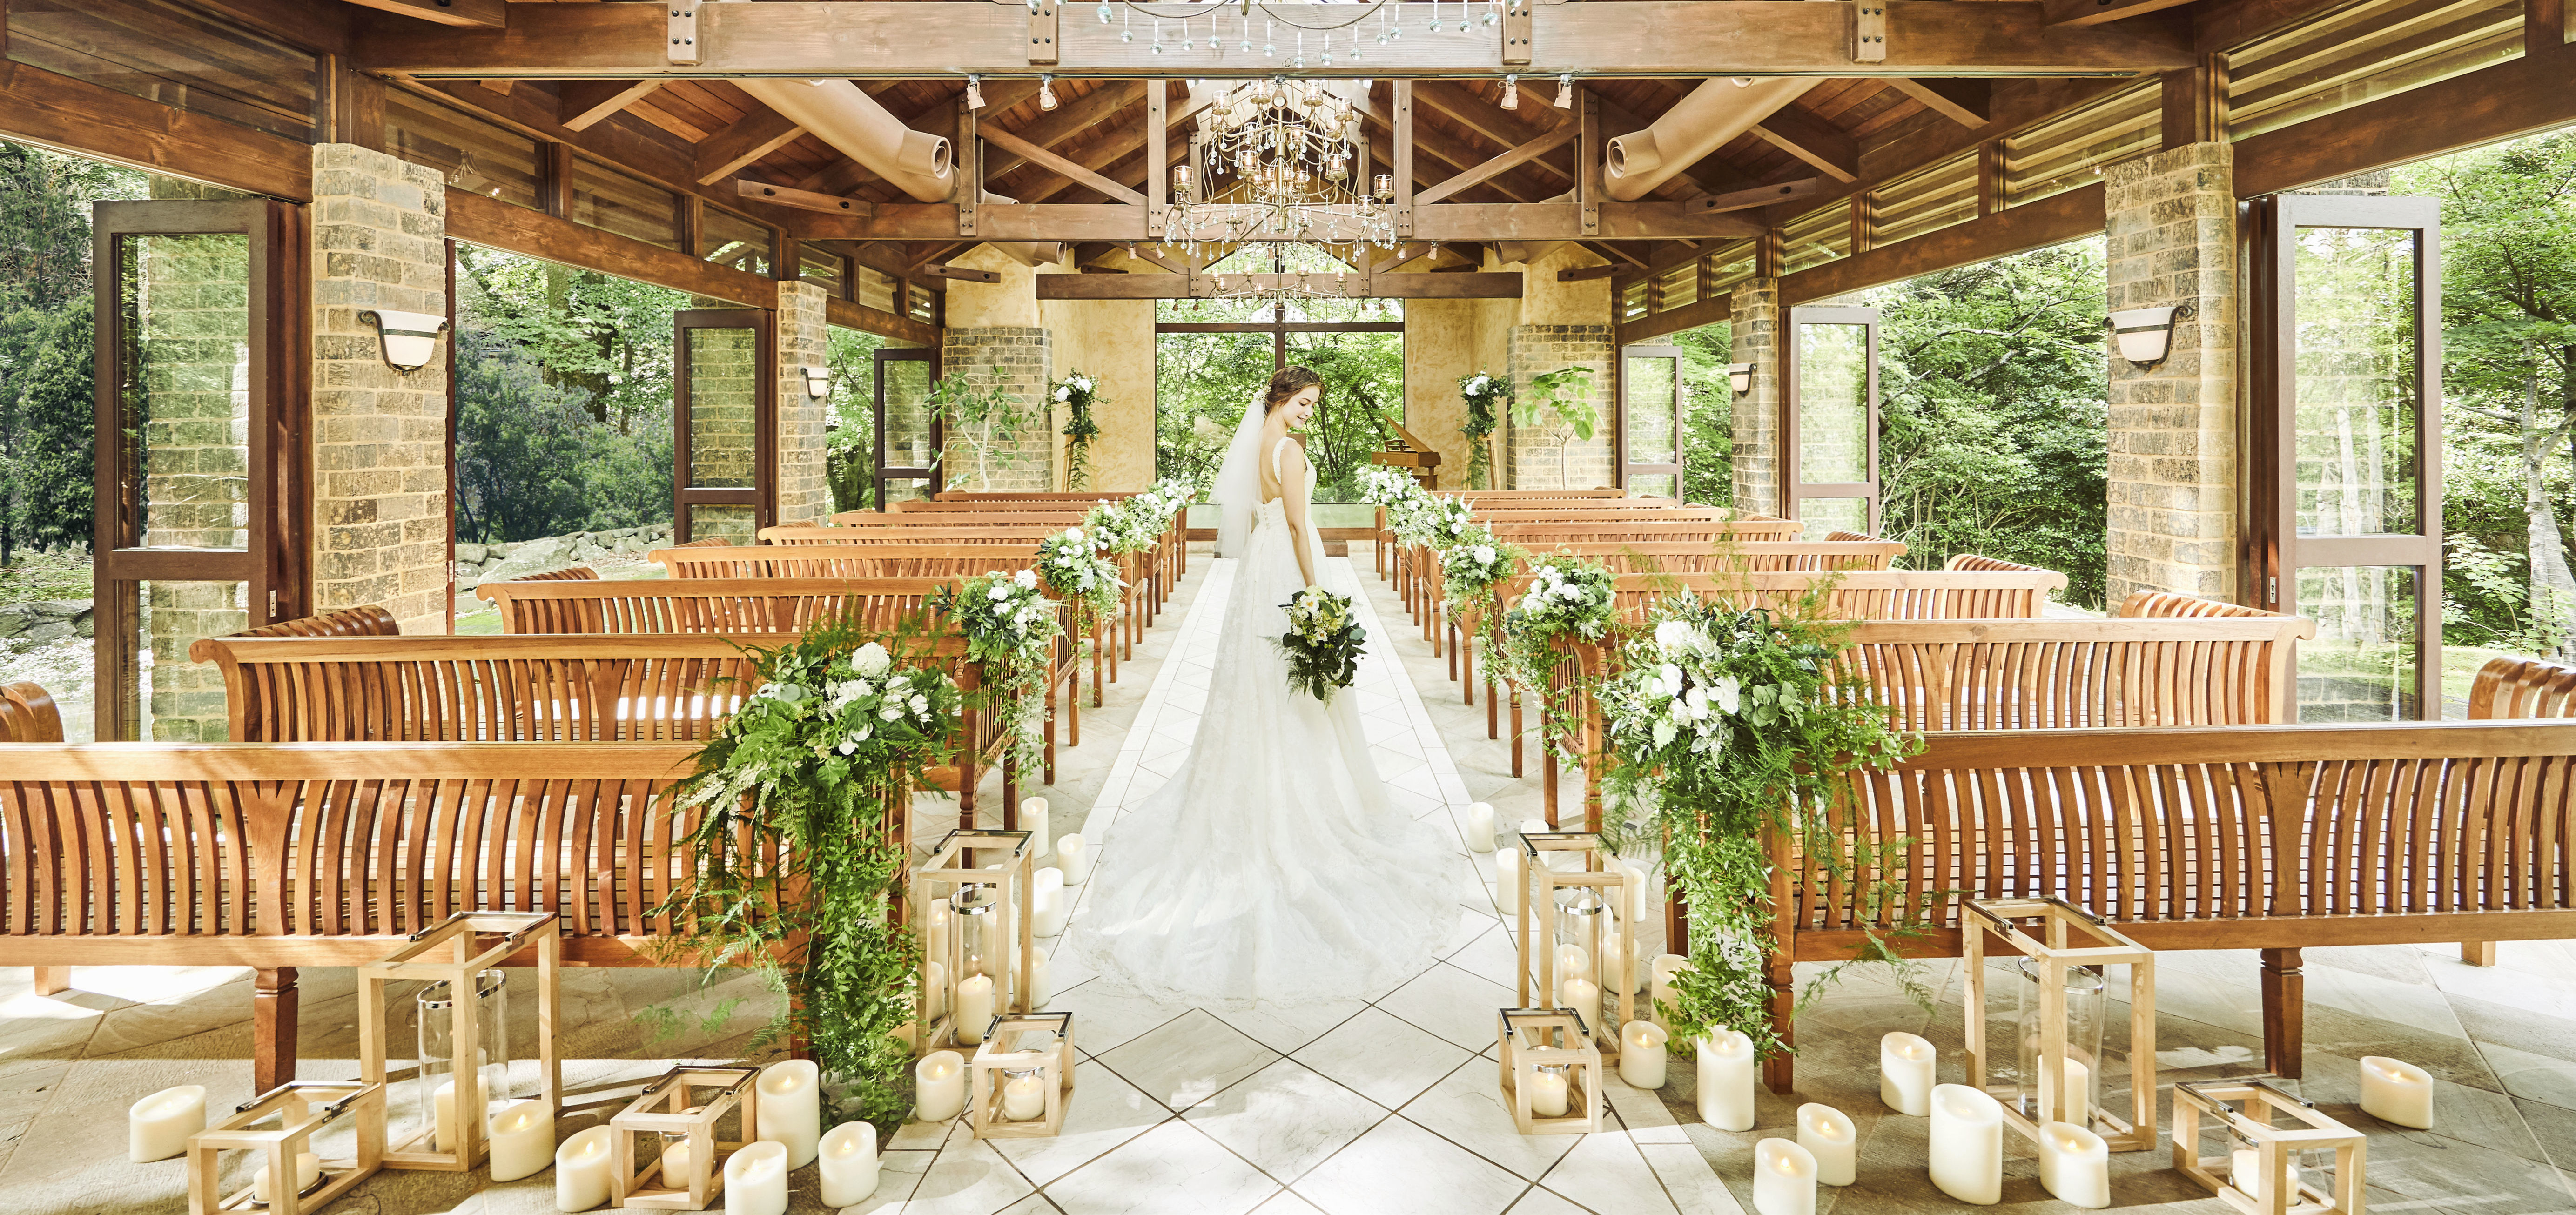 The Hilltop Terrace Chapel Wedding